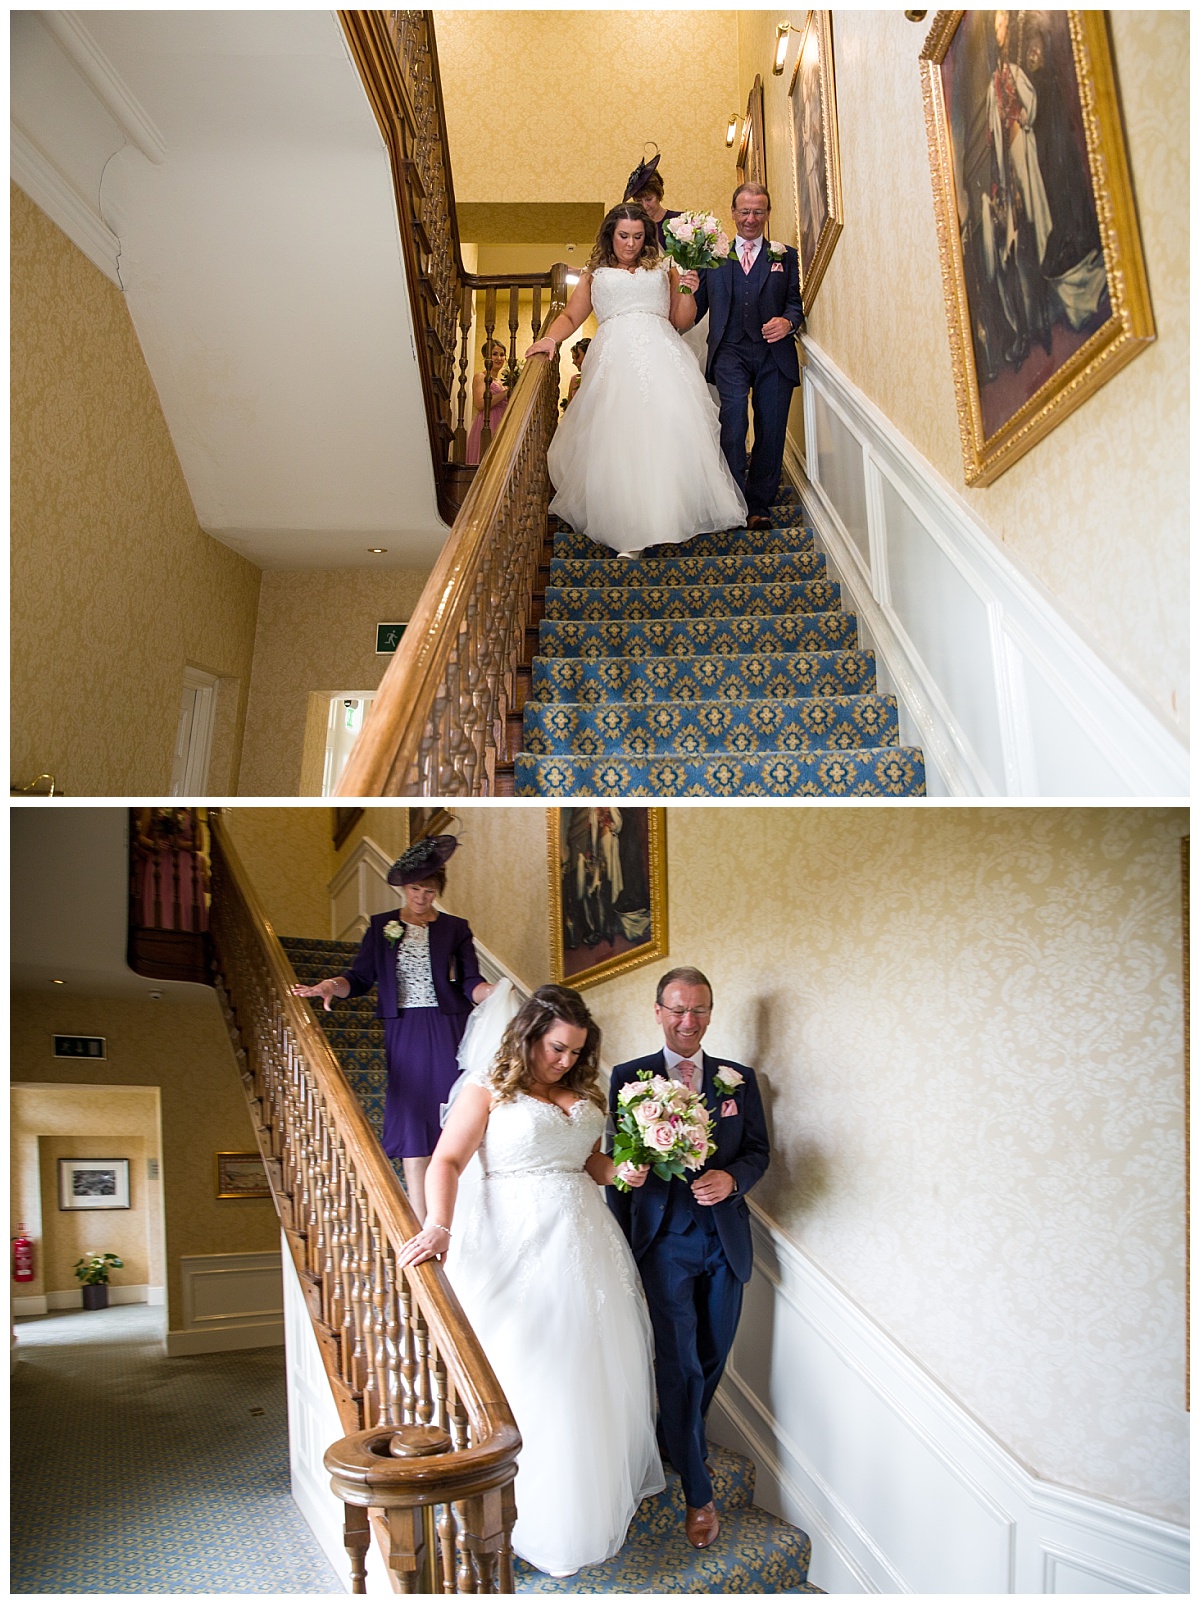 Wedding Photography Manchester - sarah and Chris's Cranage Estate wedding day 21